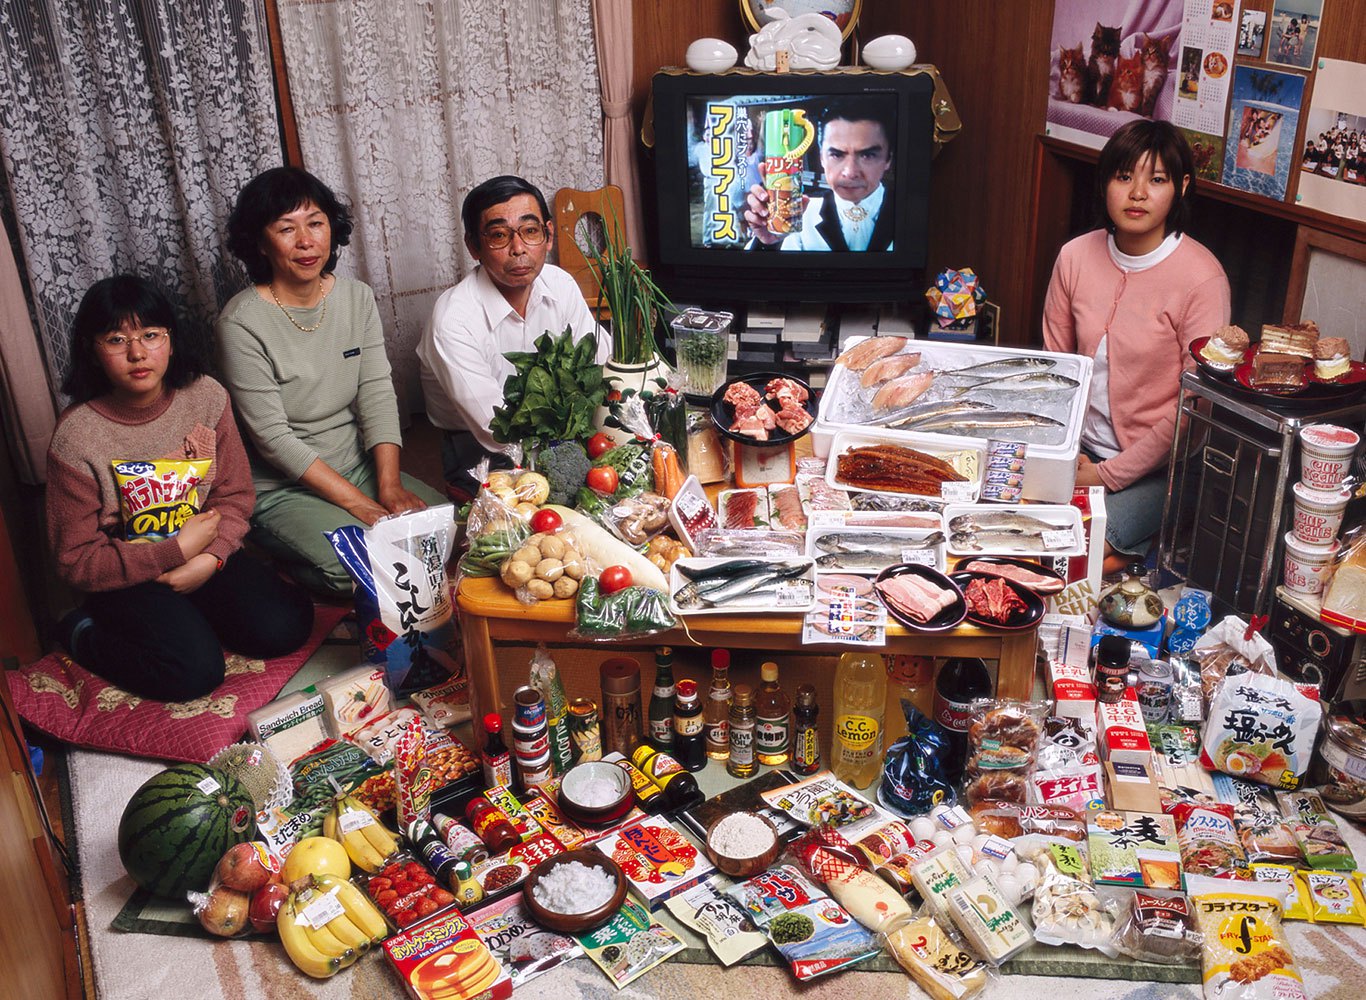 Japan: The Ukita family of Kodaira City. Food expenditure for one week: 37,699 Yen or $317.25. Favorite foods: sashimi, fruit, cake, potato chips.